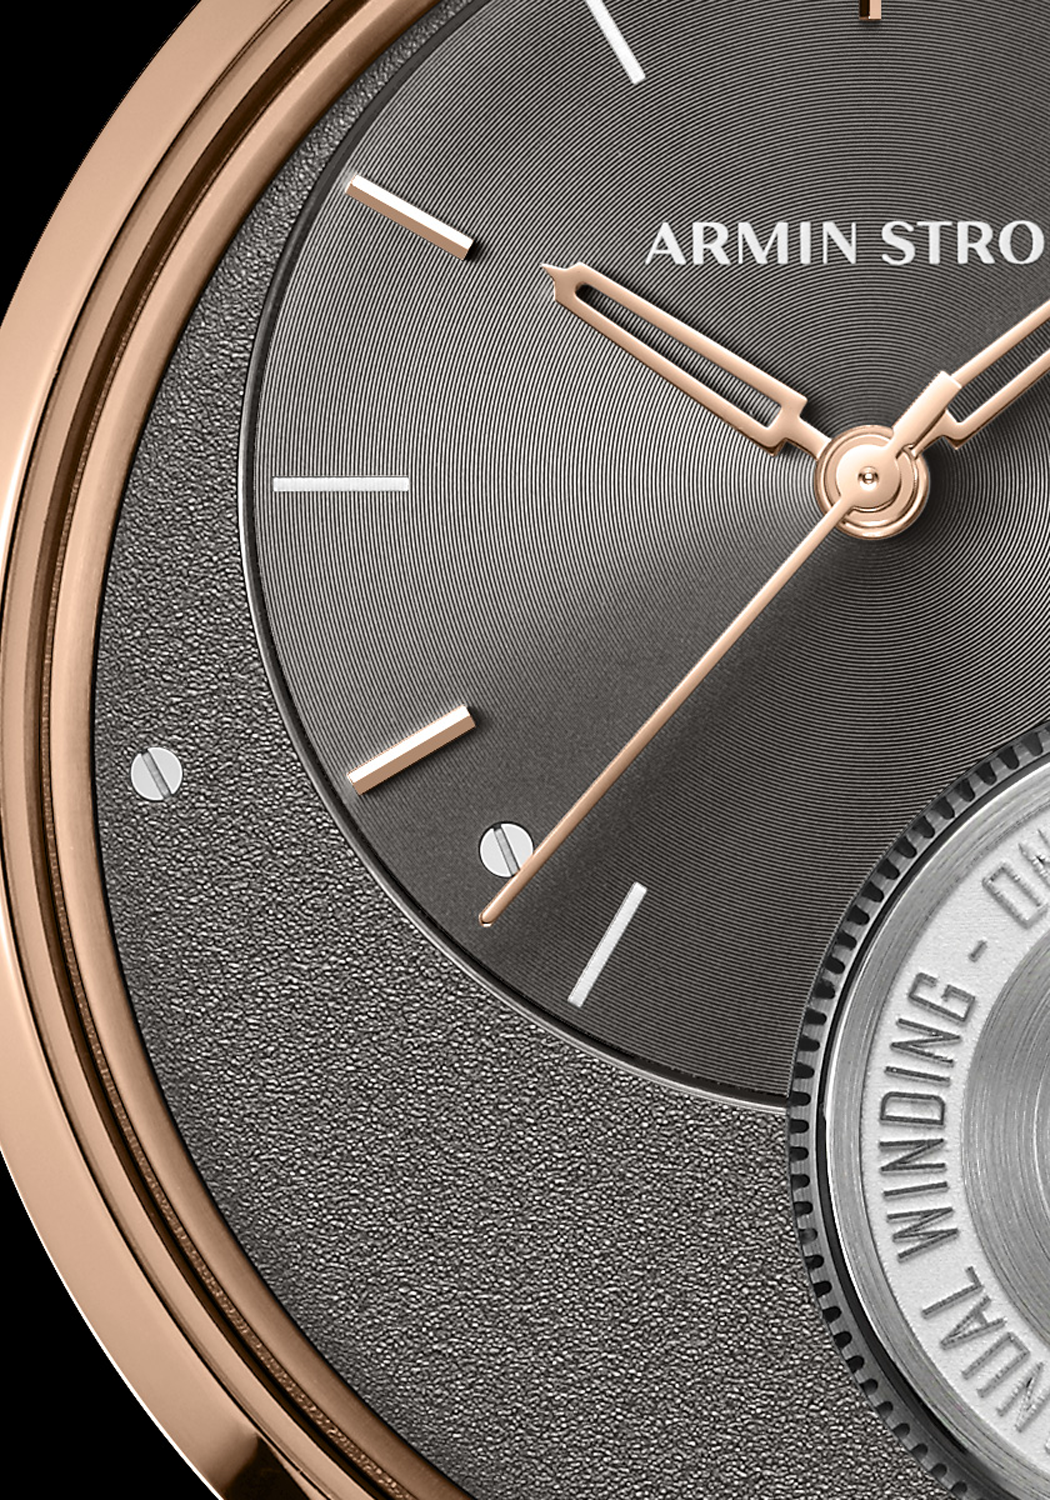 Armin Strom Tribute 1 Rose Gold Edition | Ref. RG21-TRI.70 | OsterJewelers.com